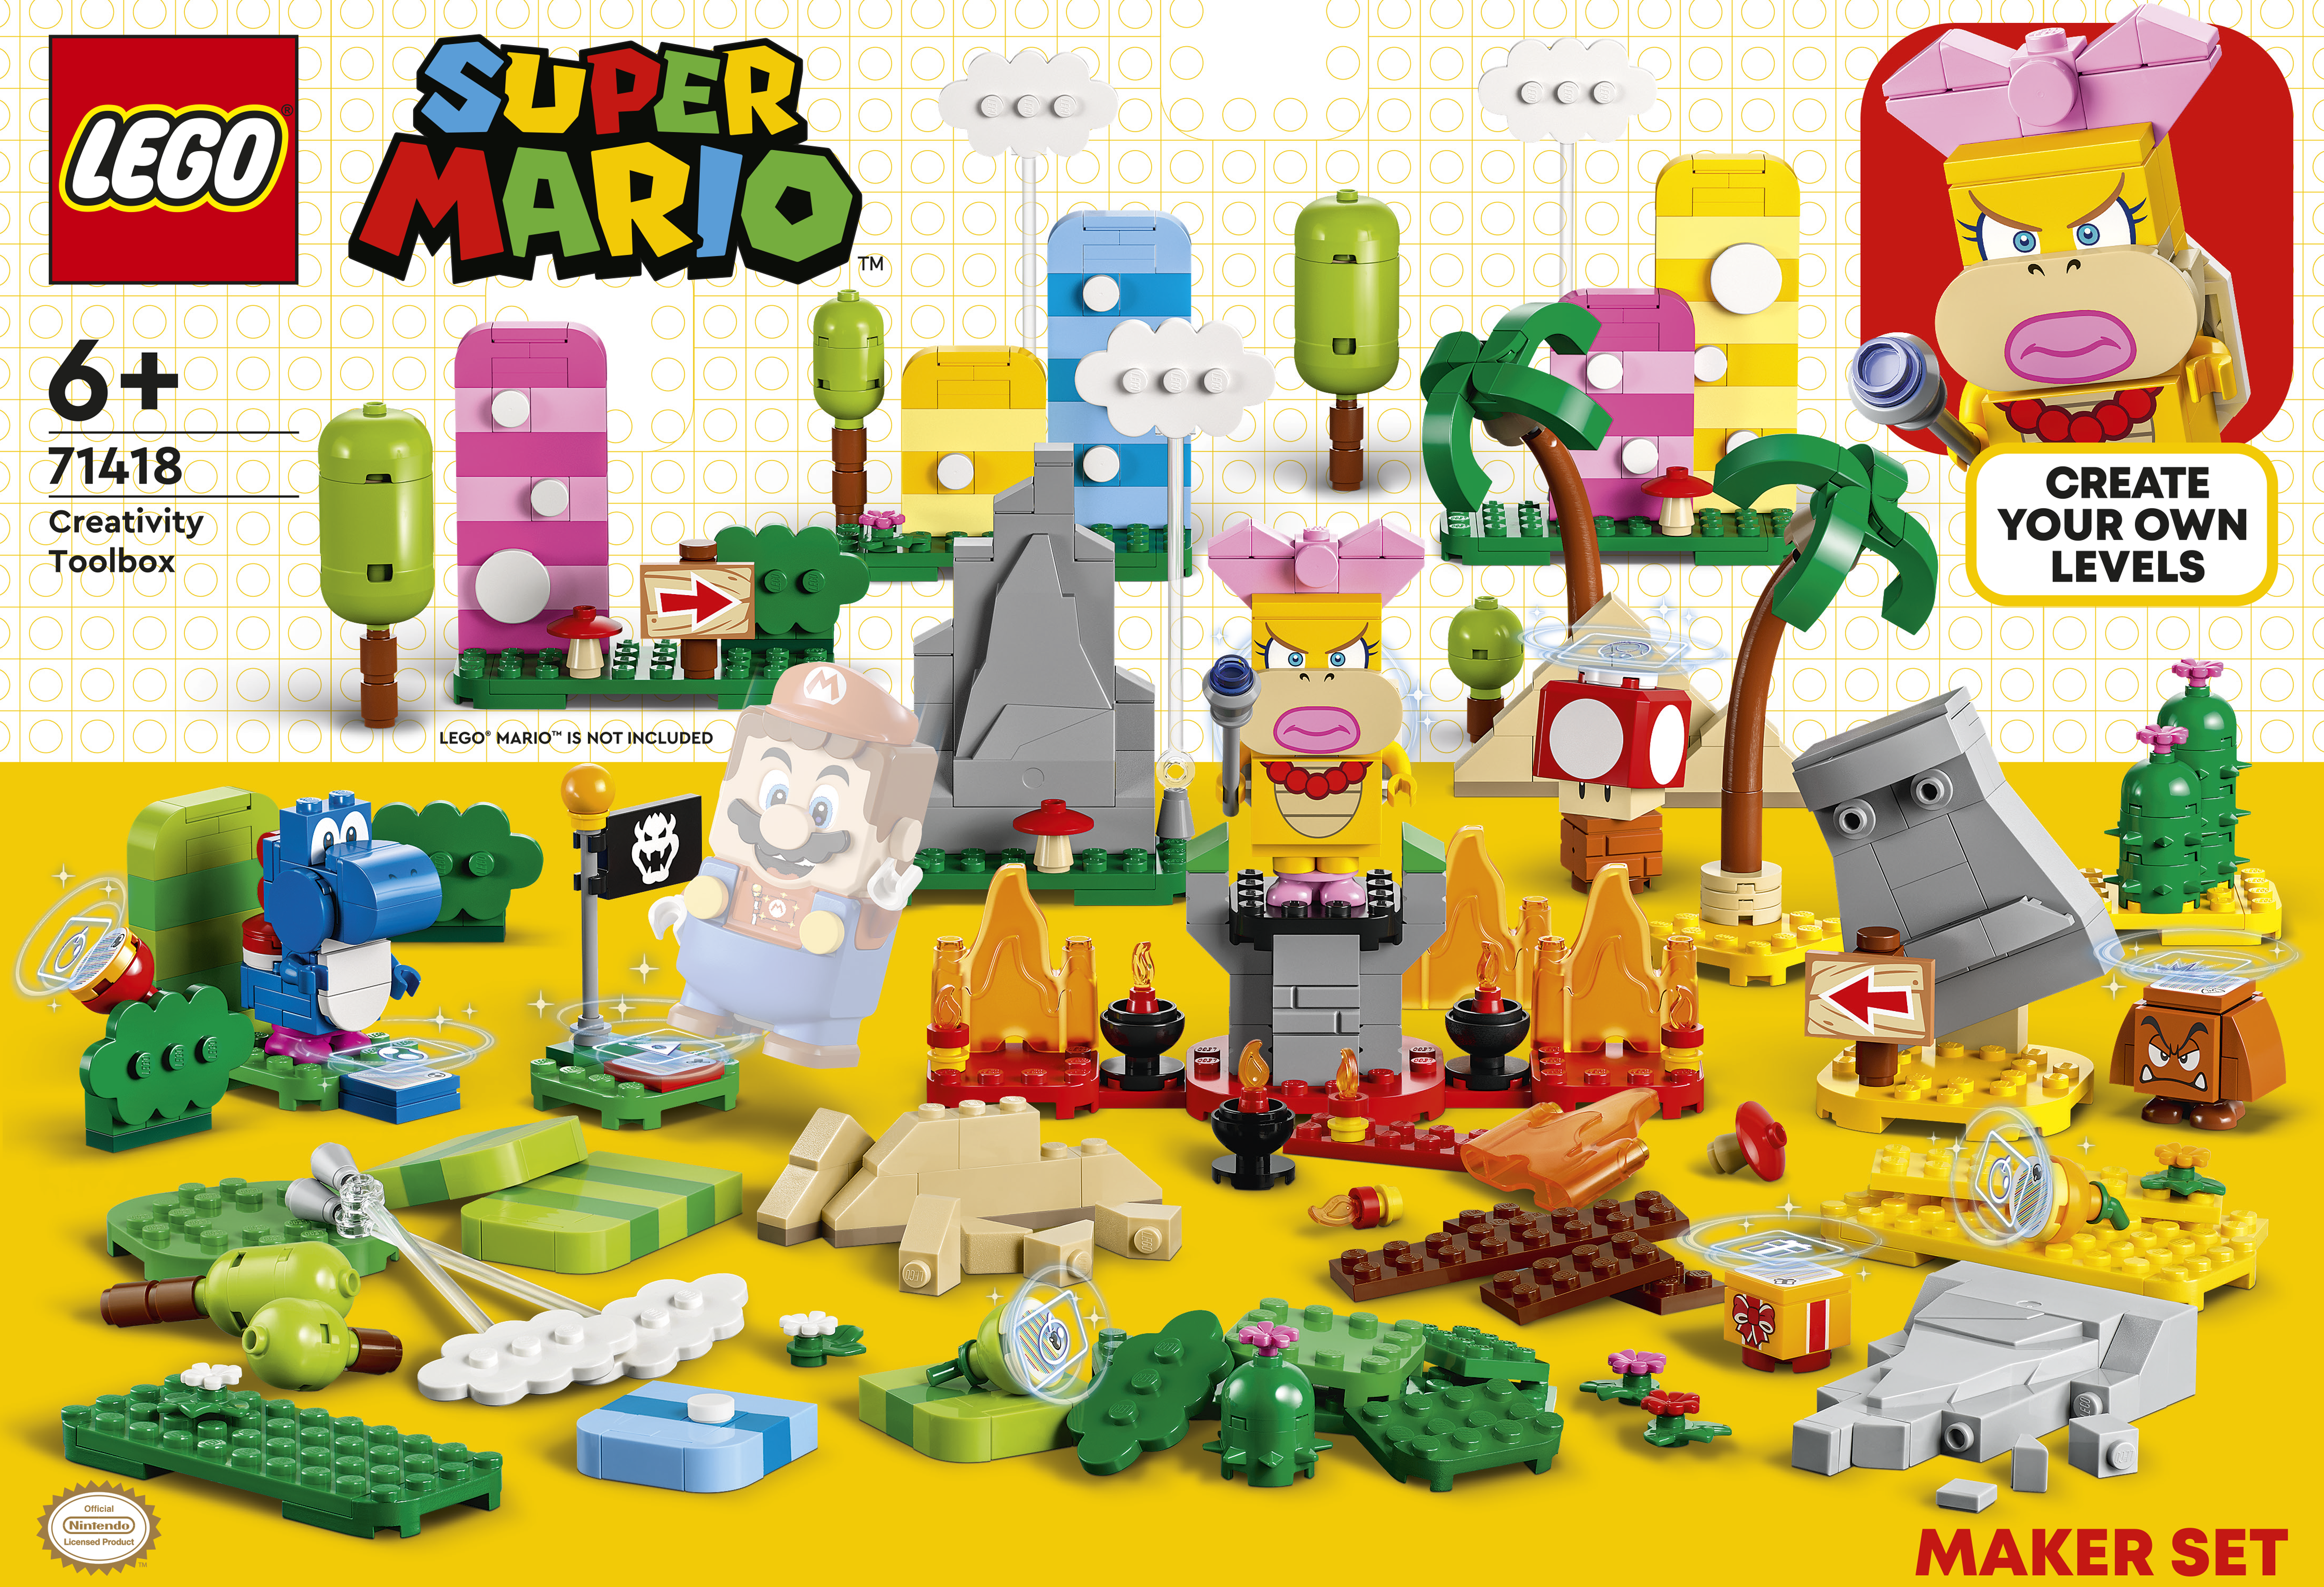 Lego Super Mario, reviewed: A real-life Super Mario Maker - CNET